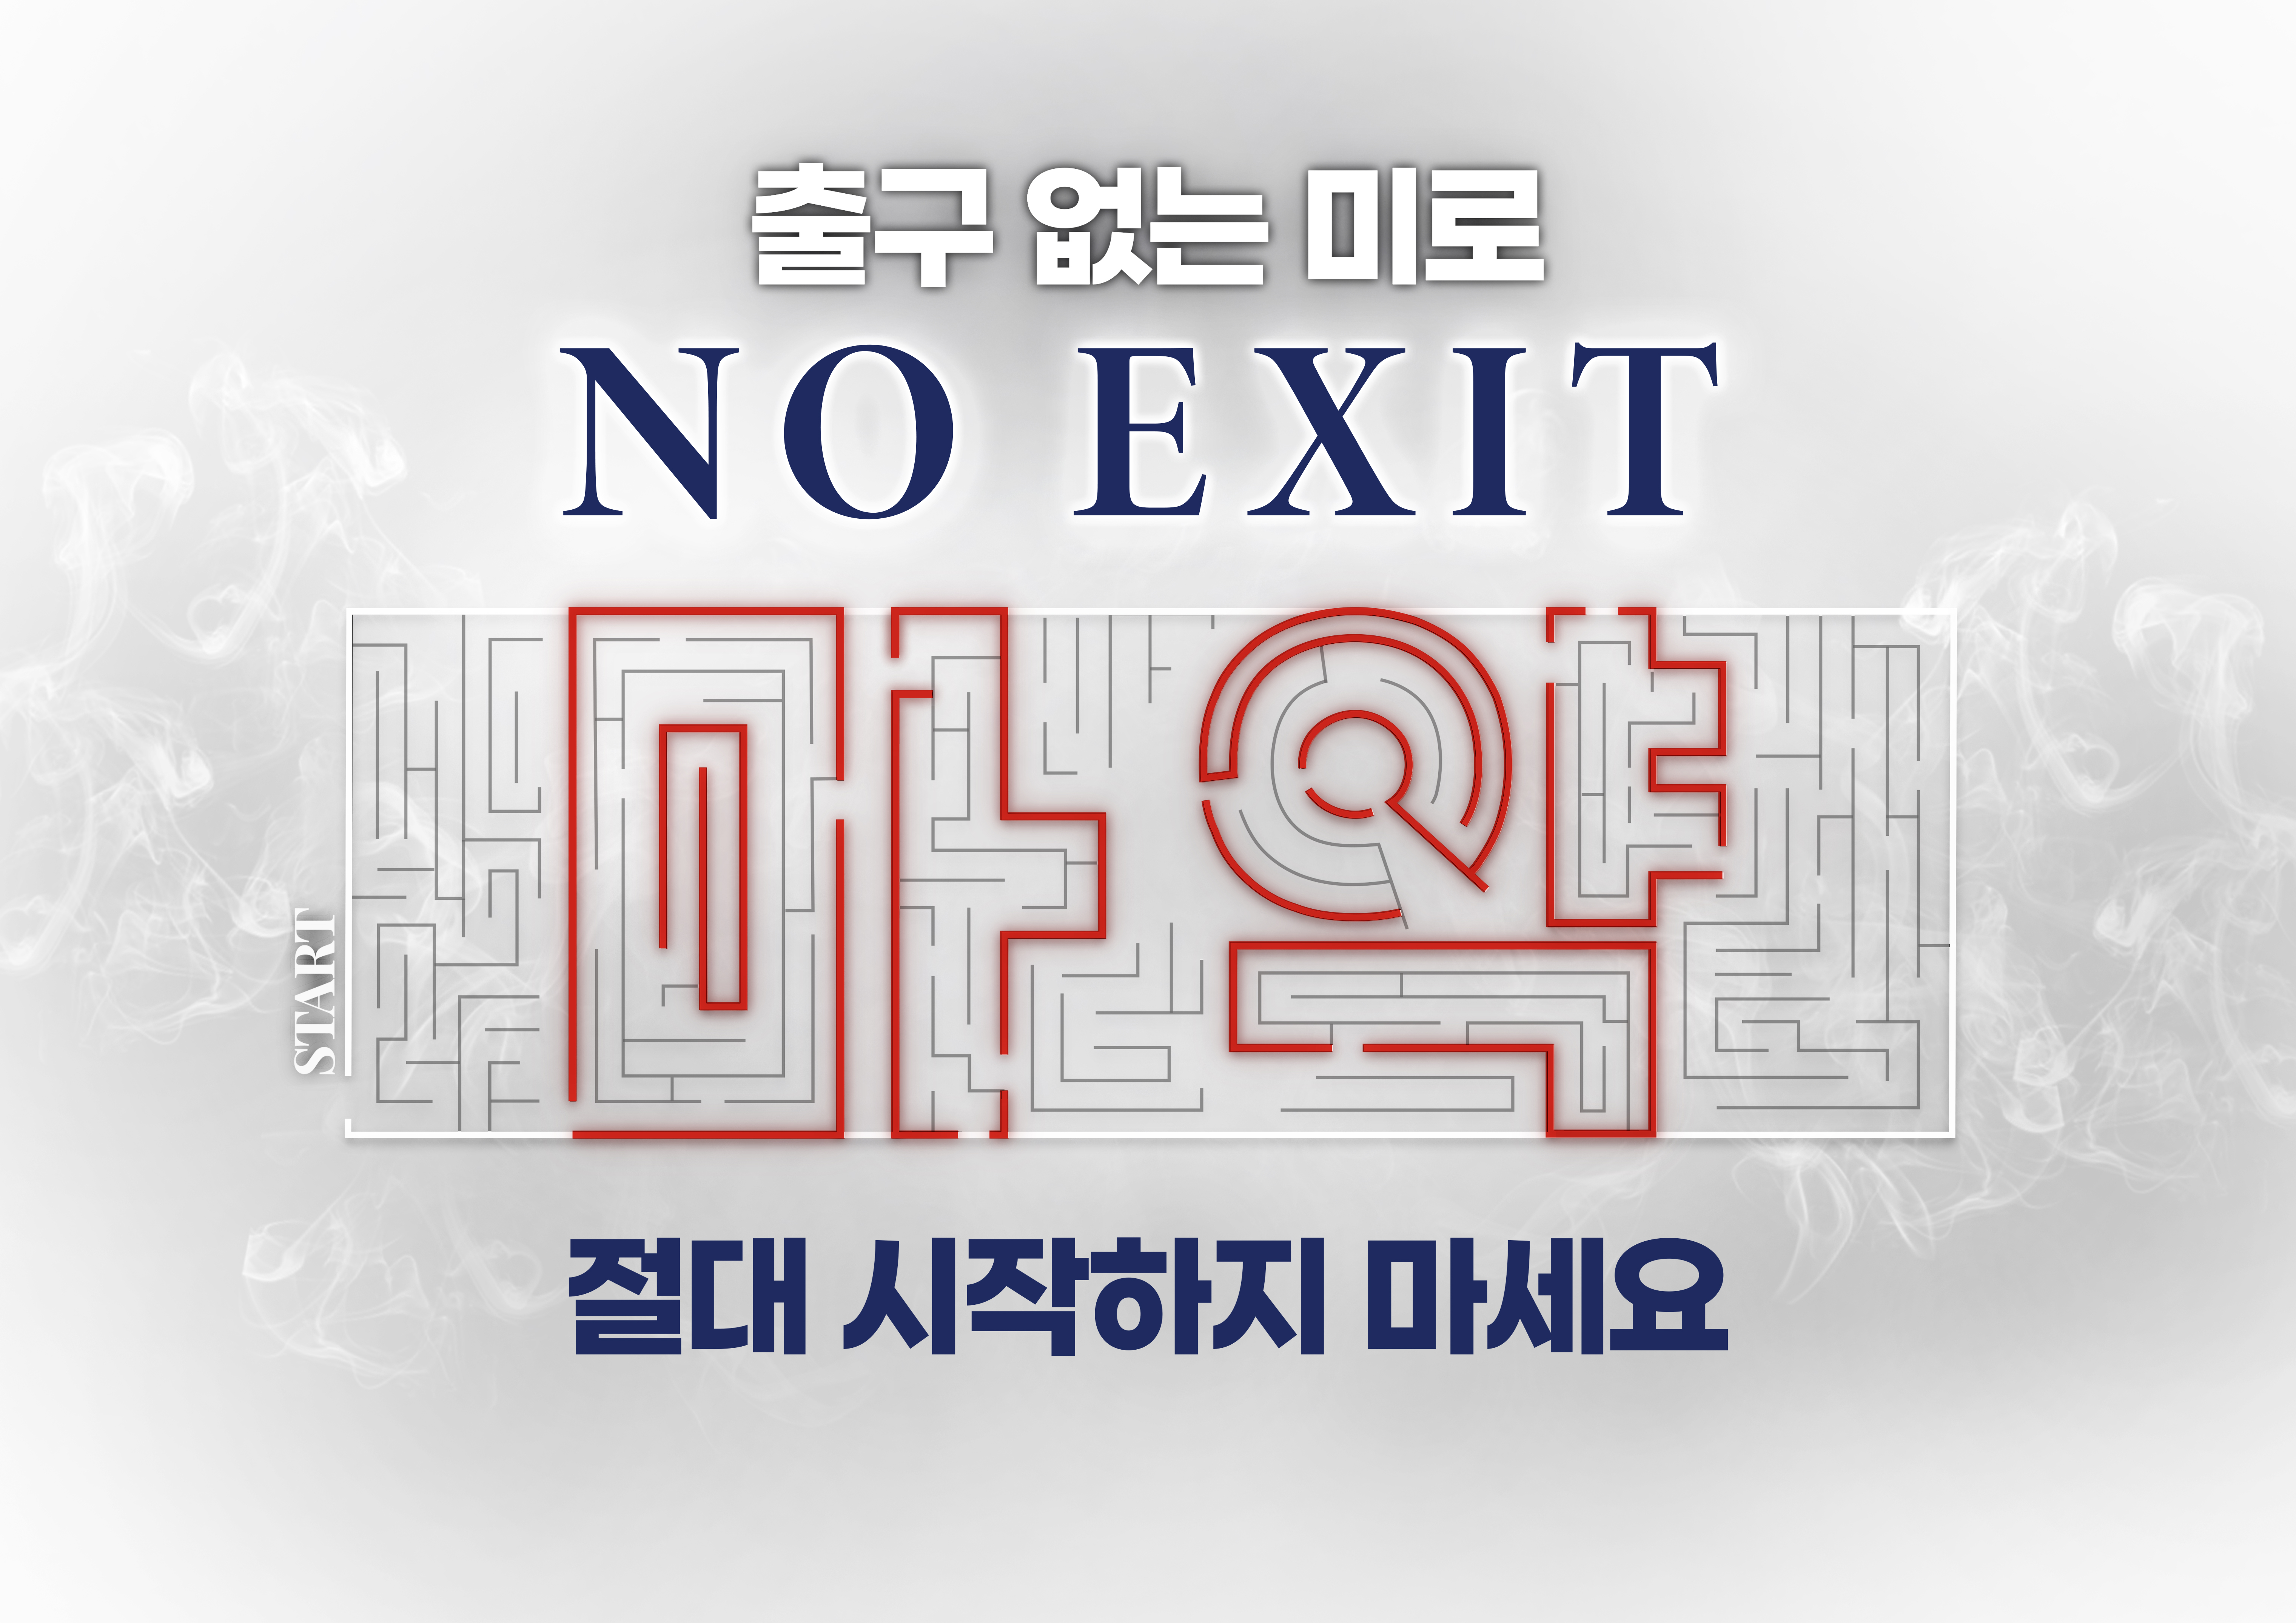 NO EXIT 캠페인(트윗)의 파일 이미지